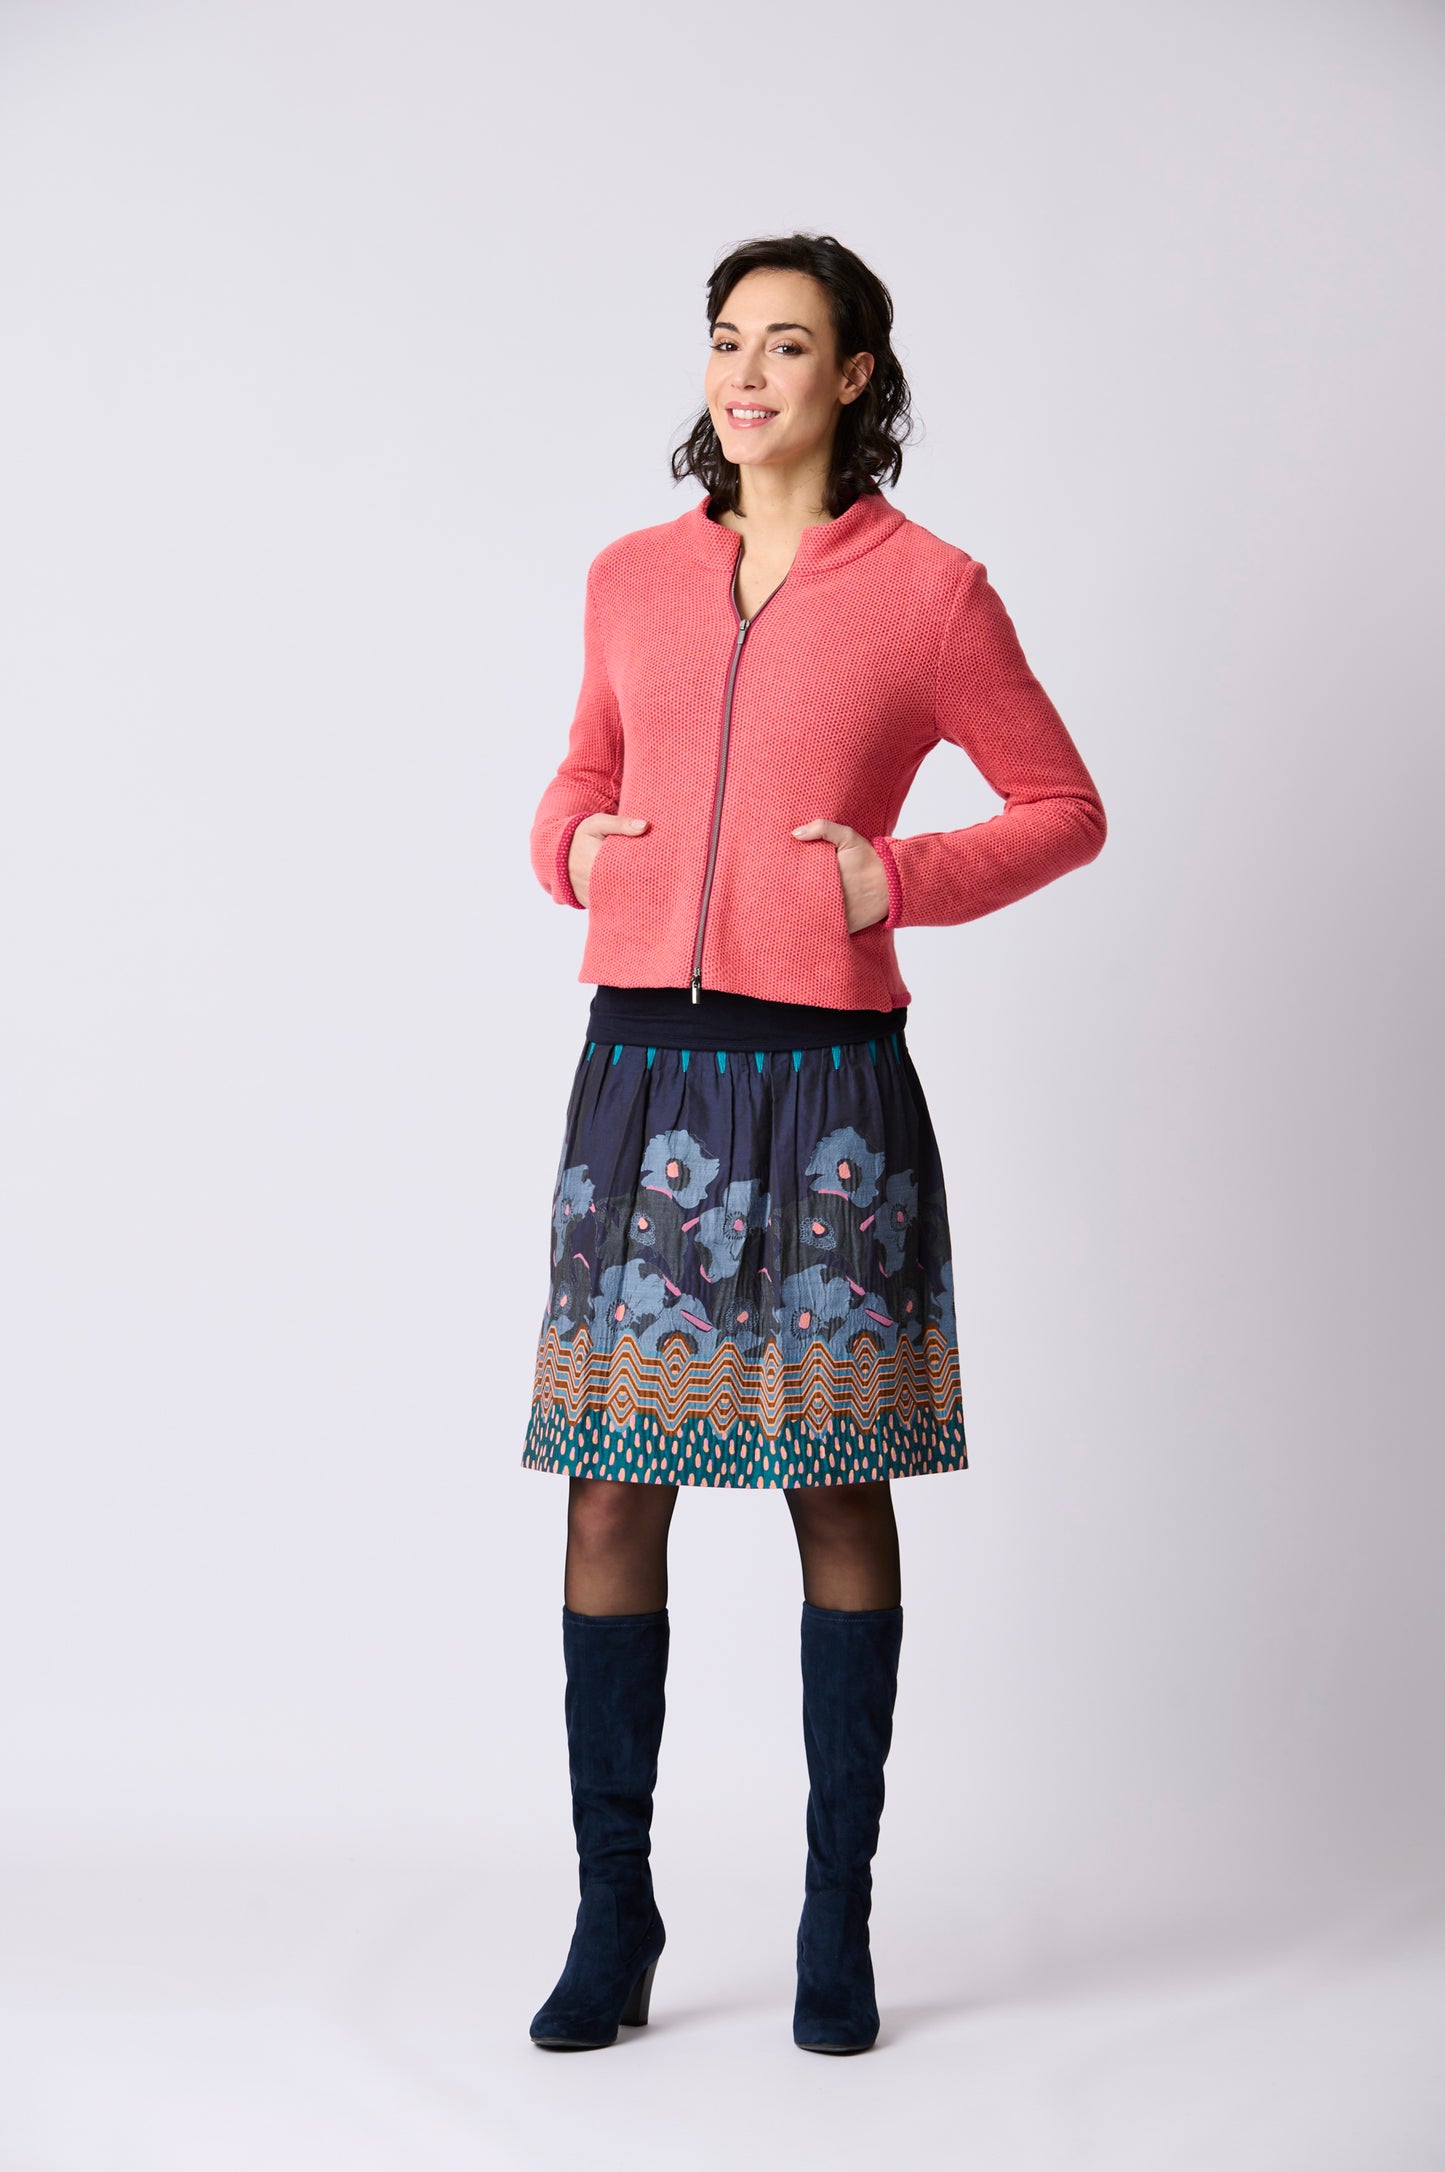 Fox's Lacros Print Skirt